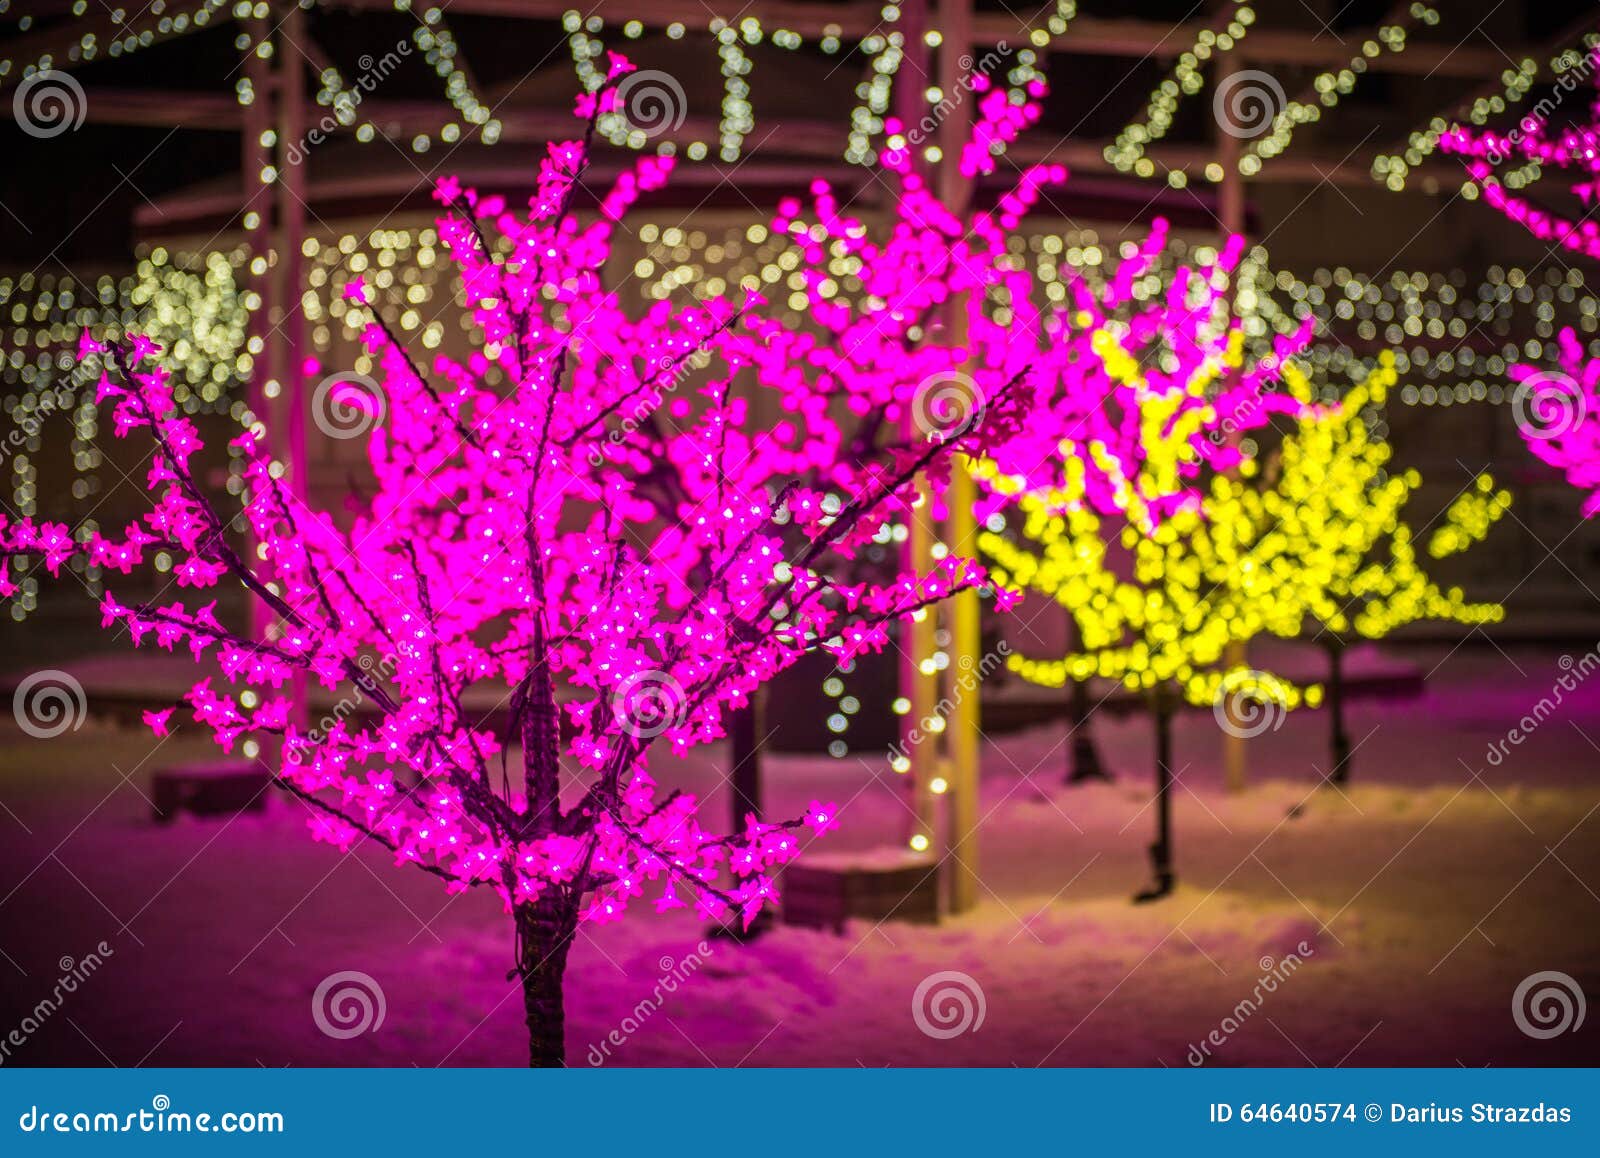 Christmas Decoration Lights on Trees Stock Photo - Image of night ...